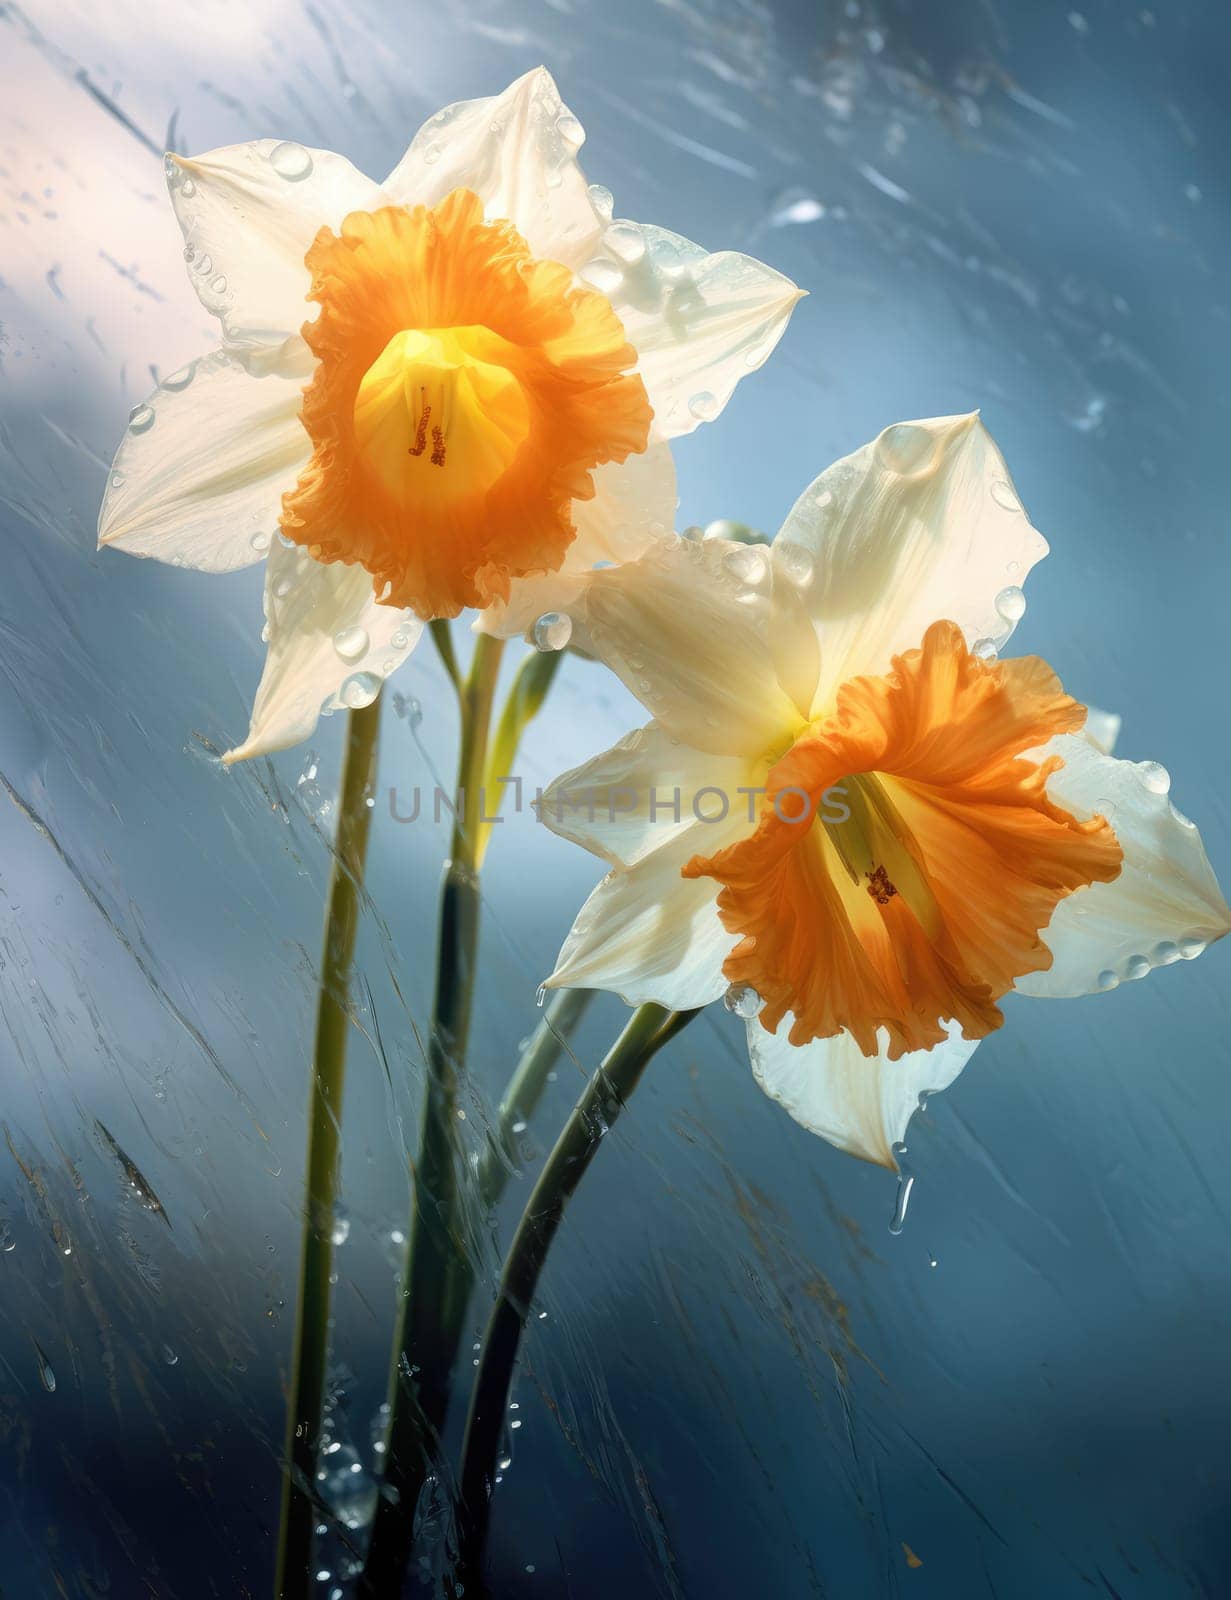 White daffodils in the rain drops by palinchak